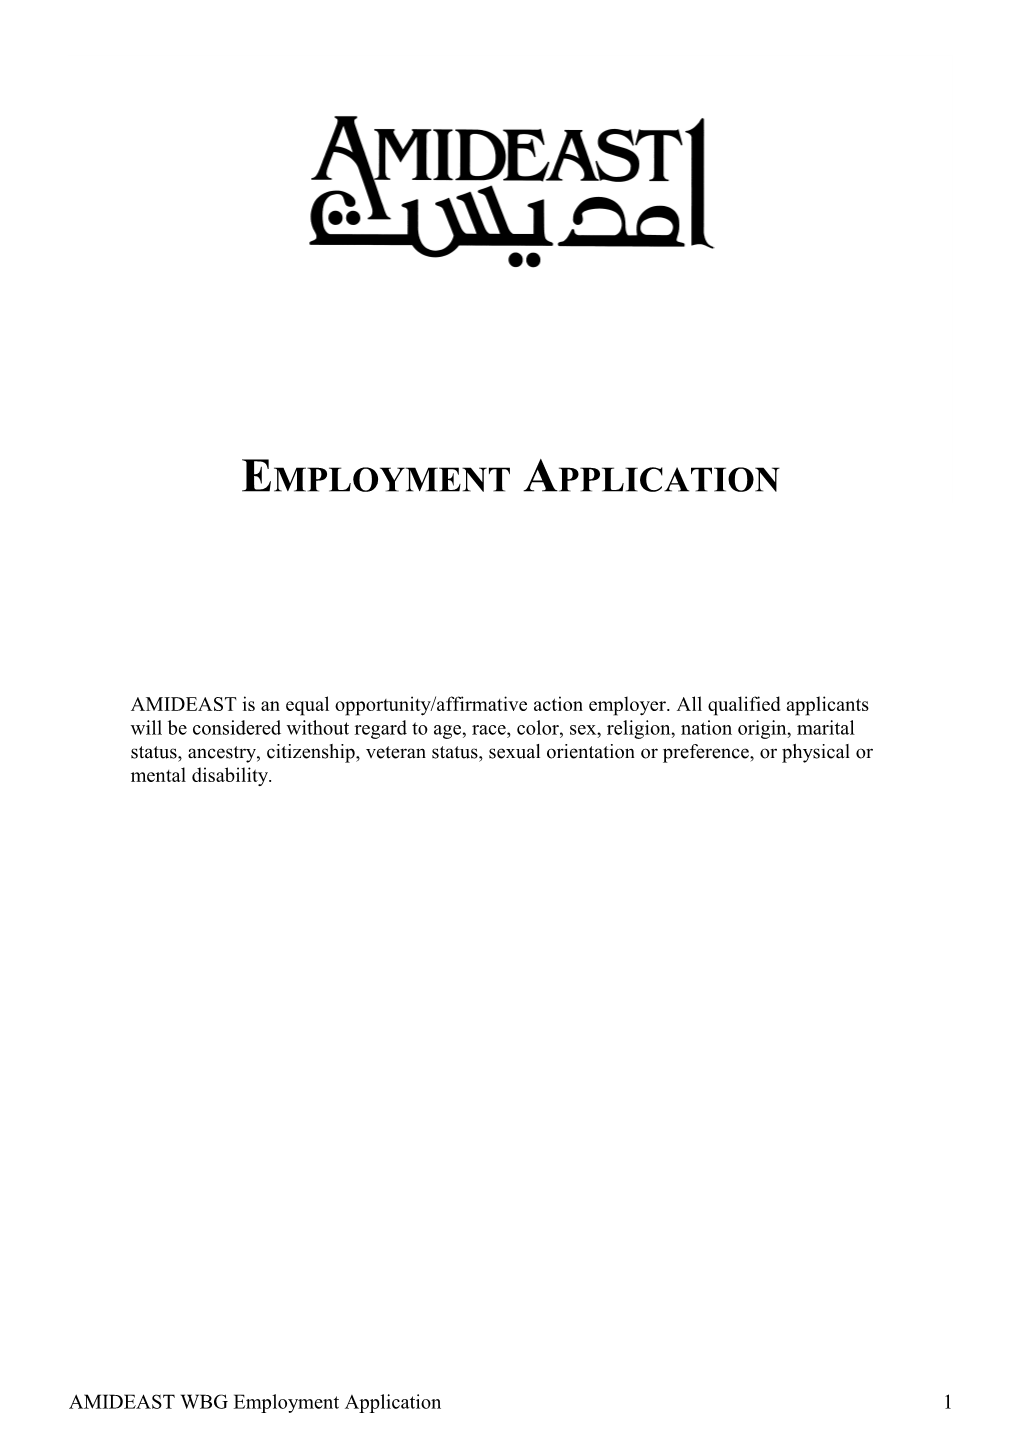 Employment Application s17